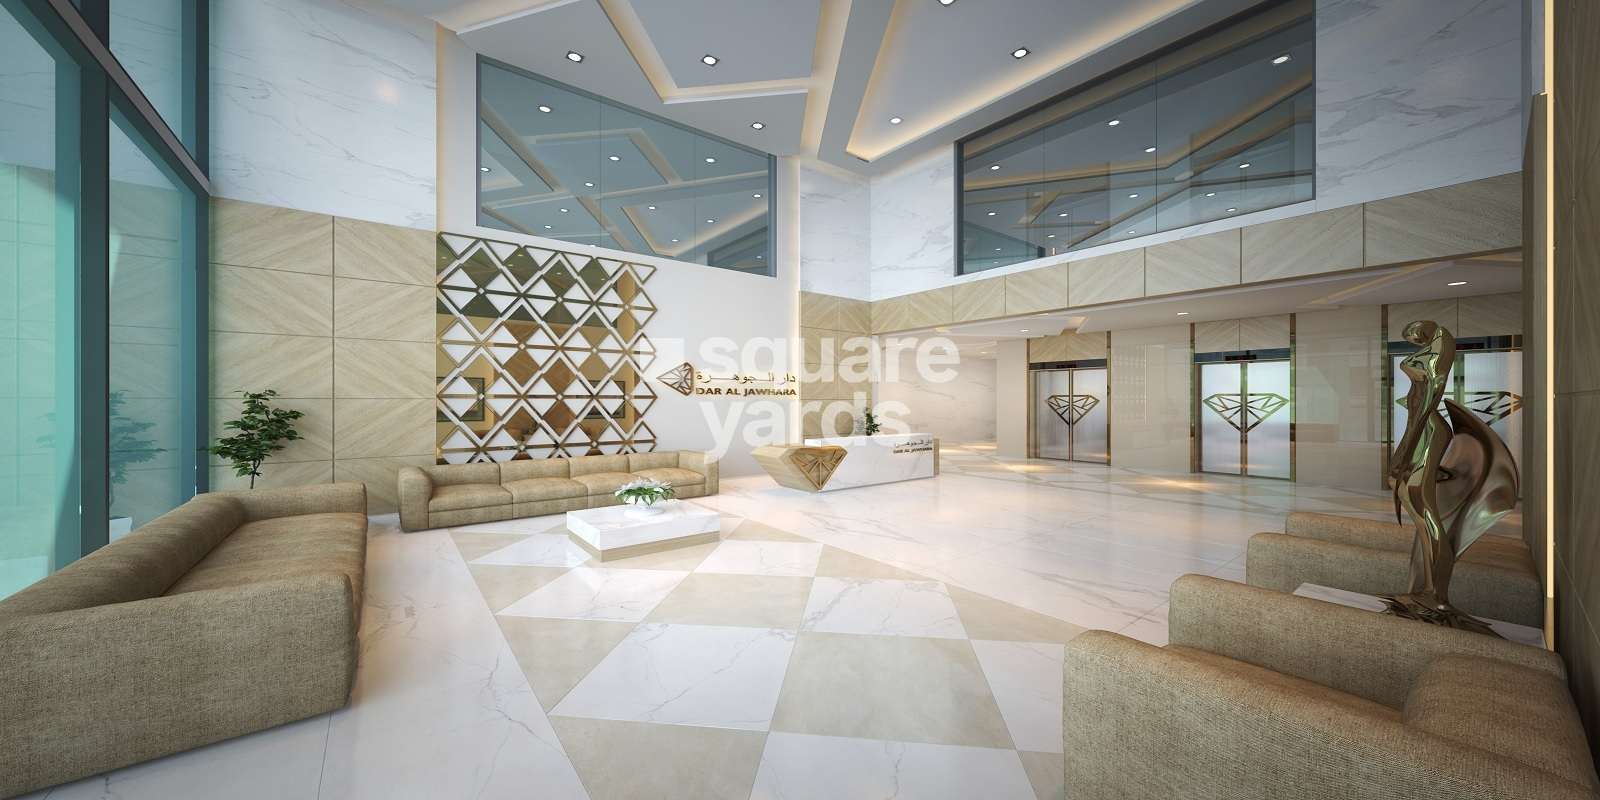 dar al jawhara project amenities features1